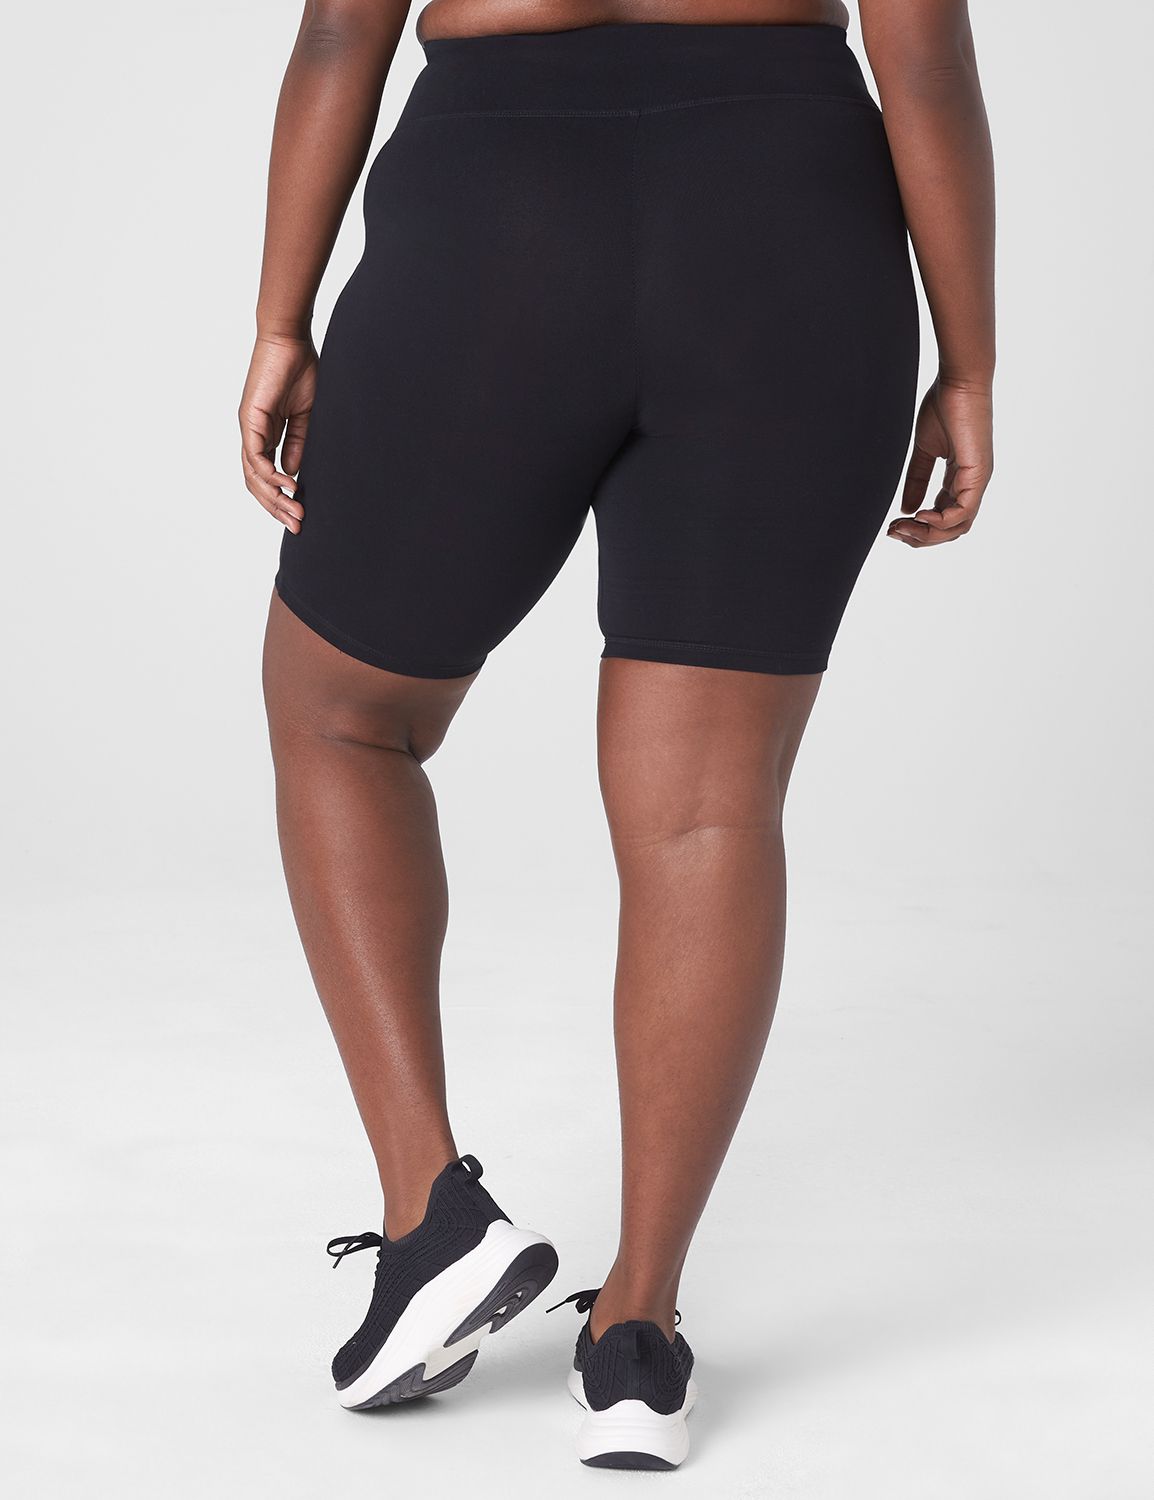 Women's High Waisted Bike Shorts Wide Elastic Tummy Control Stretch Bermuda